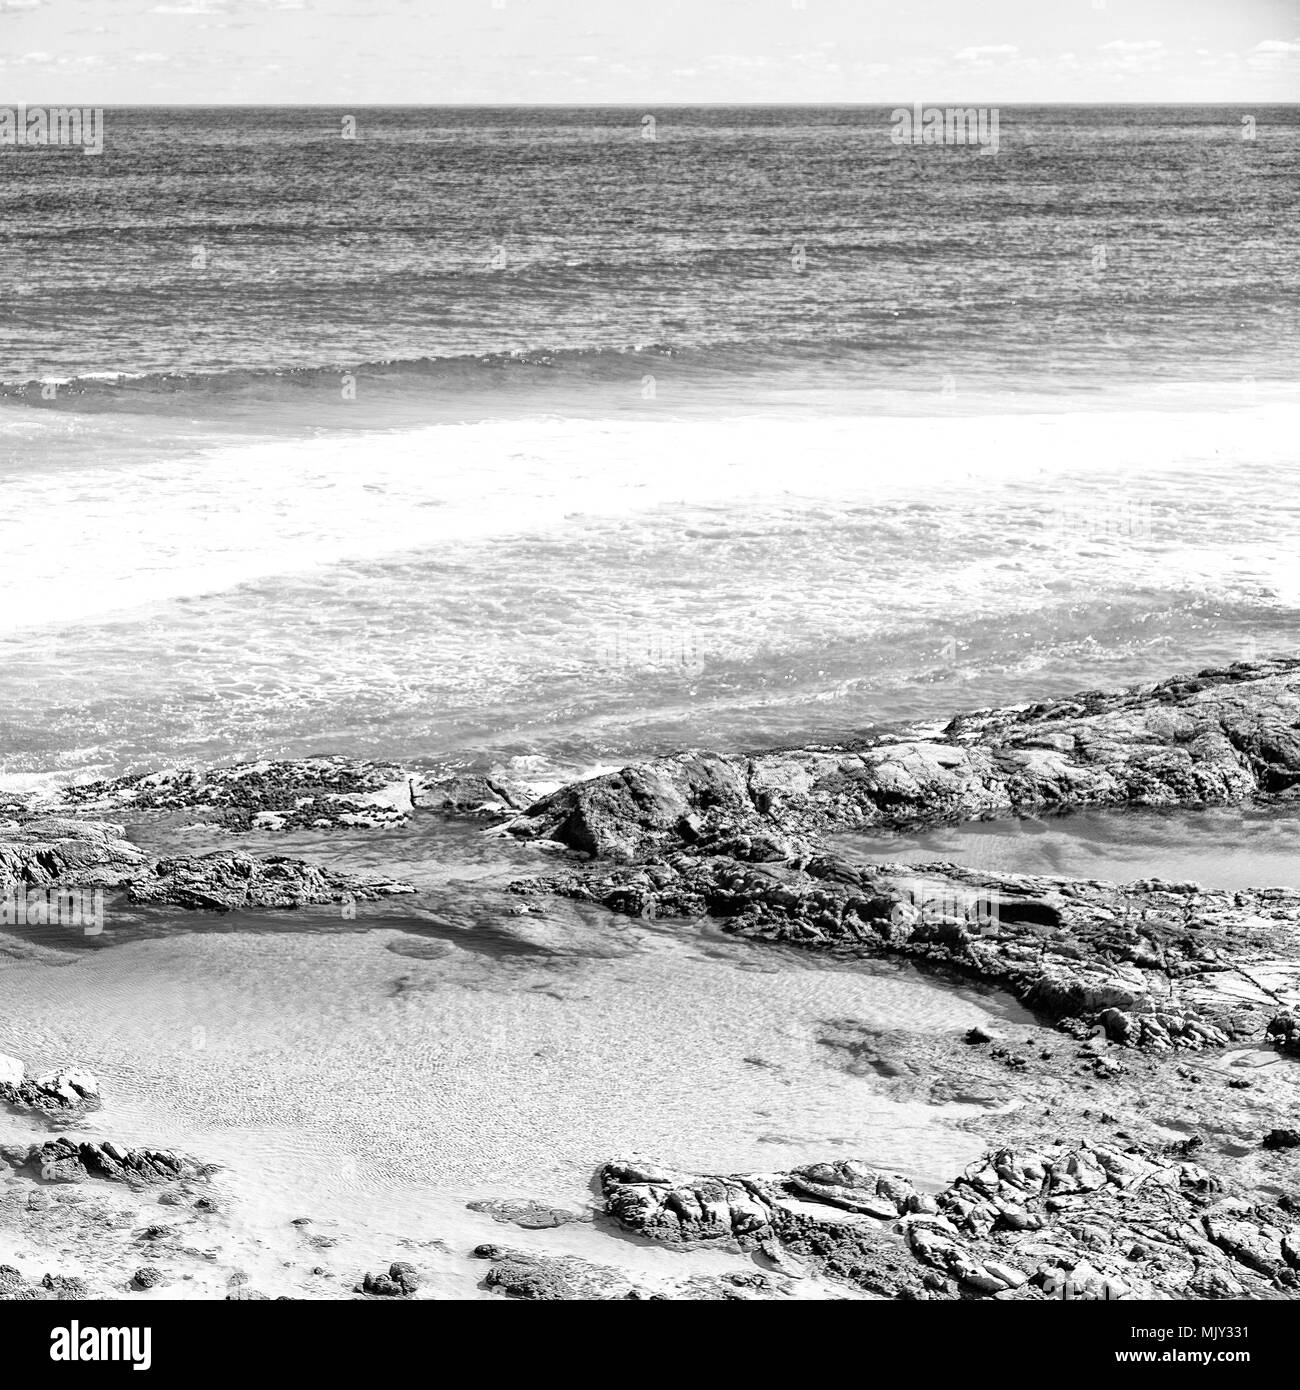 in  australia fraser island the beach near the rocks in the  wave of ocean Stock Photo